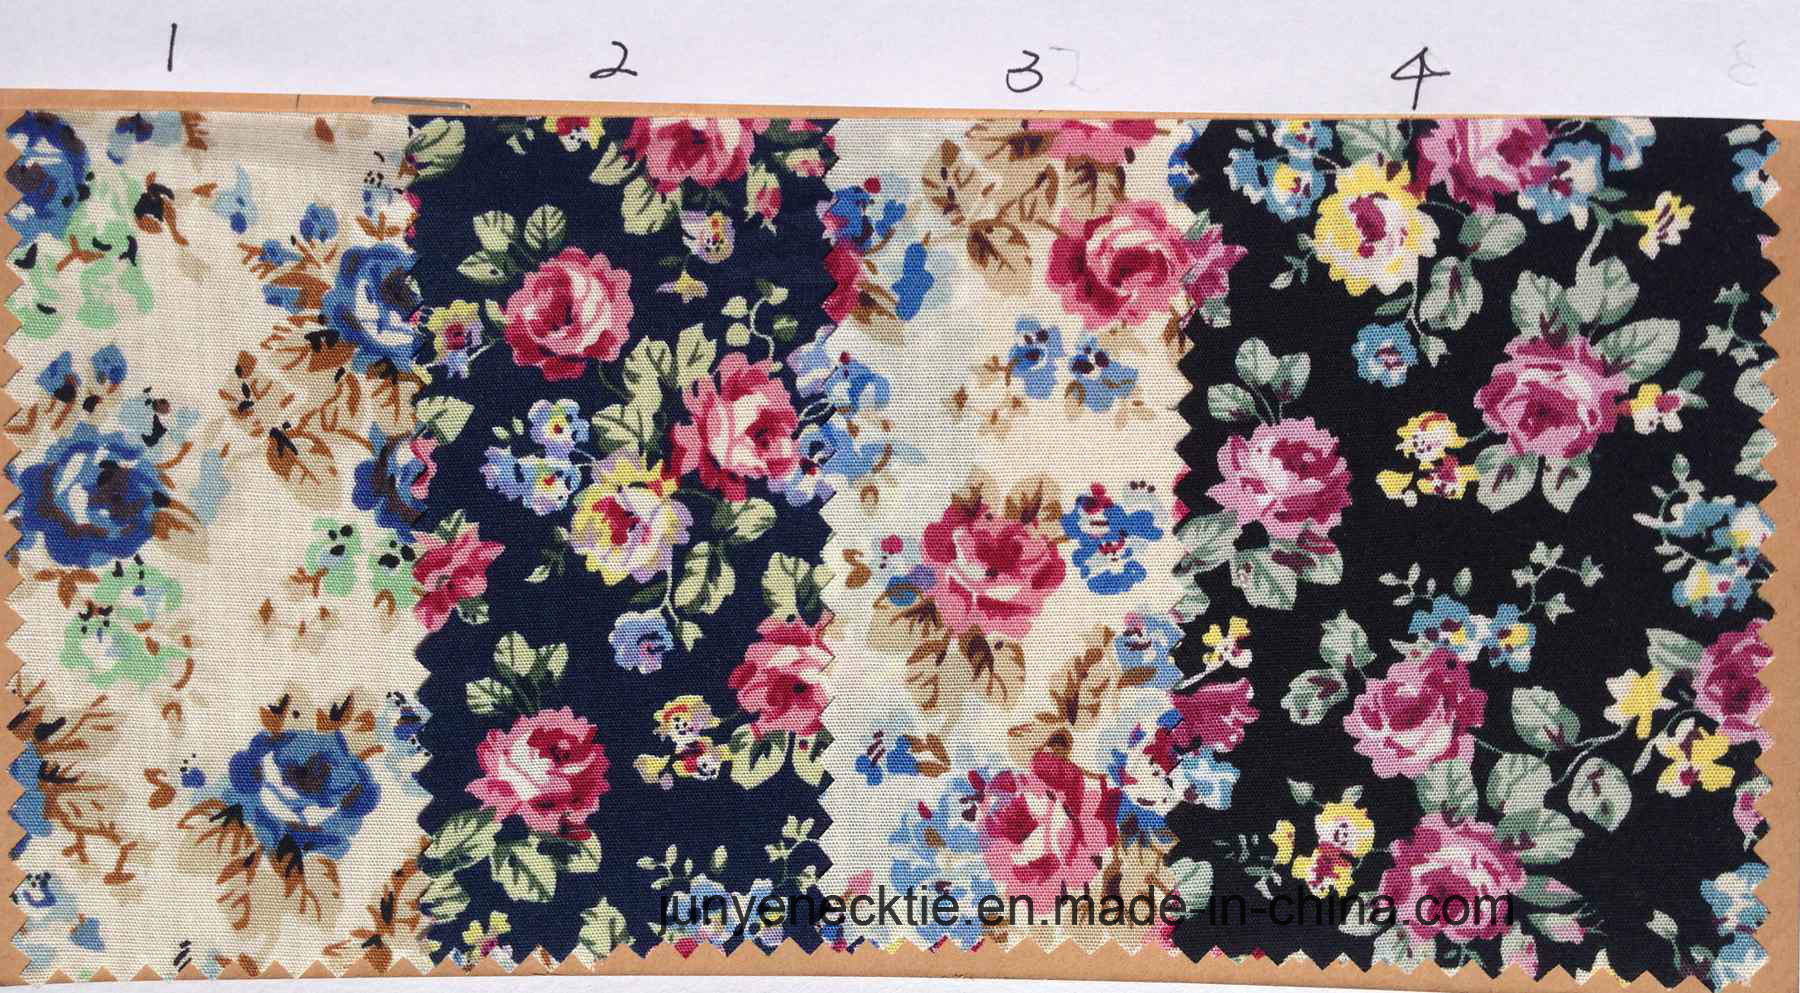 Cotton Printed Floral Design Tie Fabric